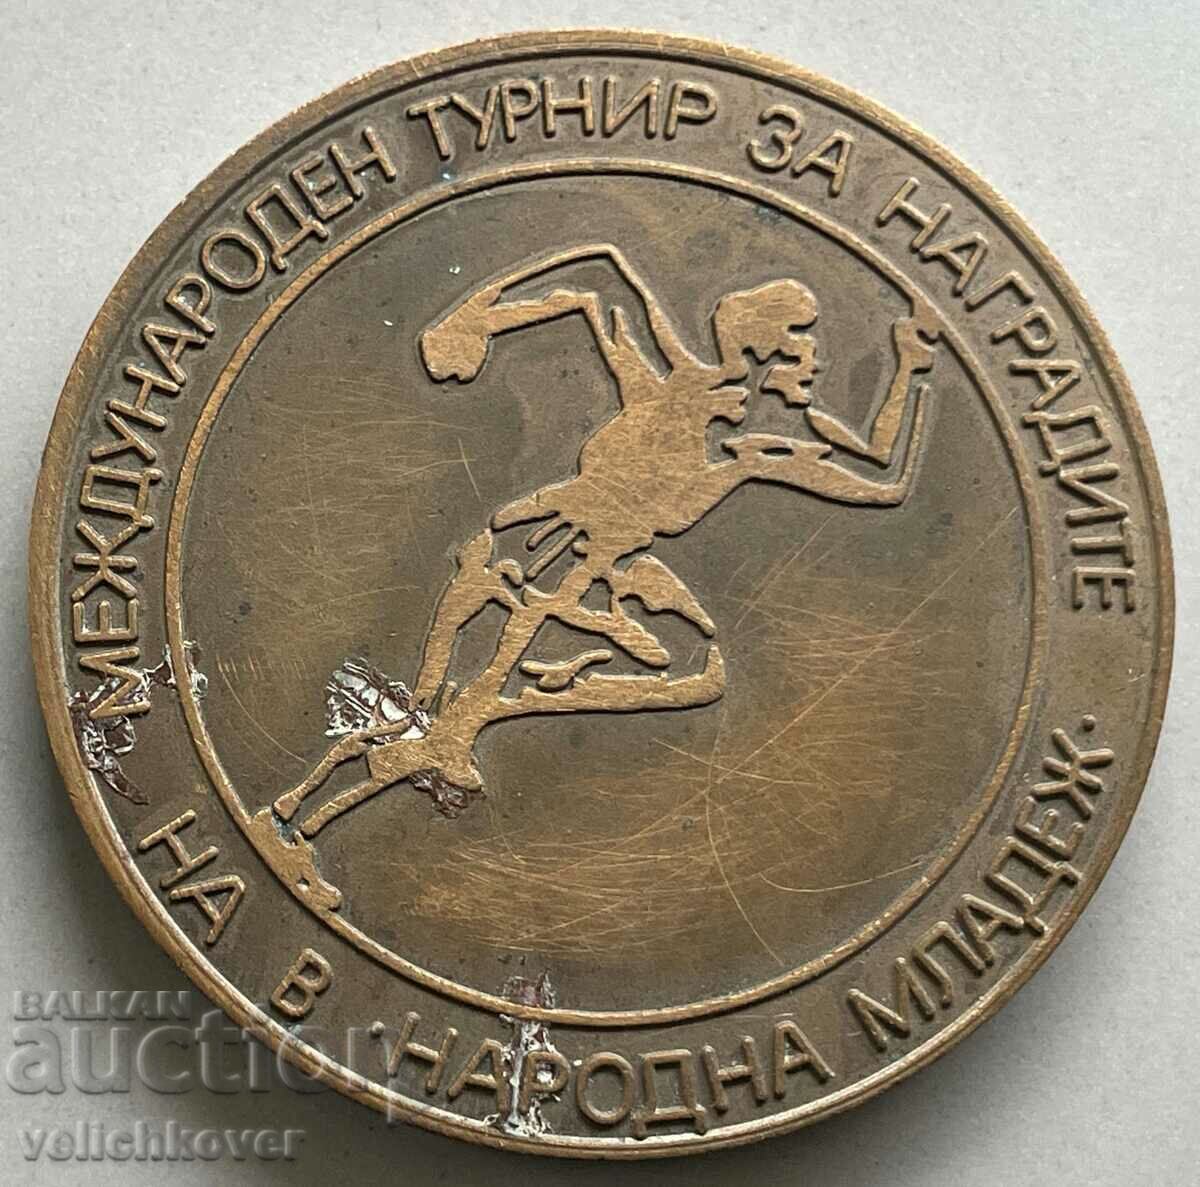 34219 Bulgaria plaque athletics tournament National Youth